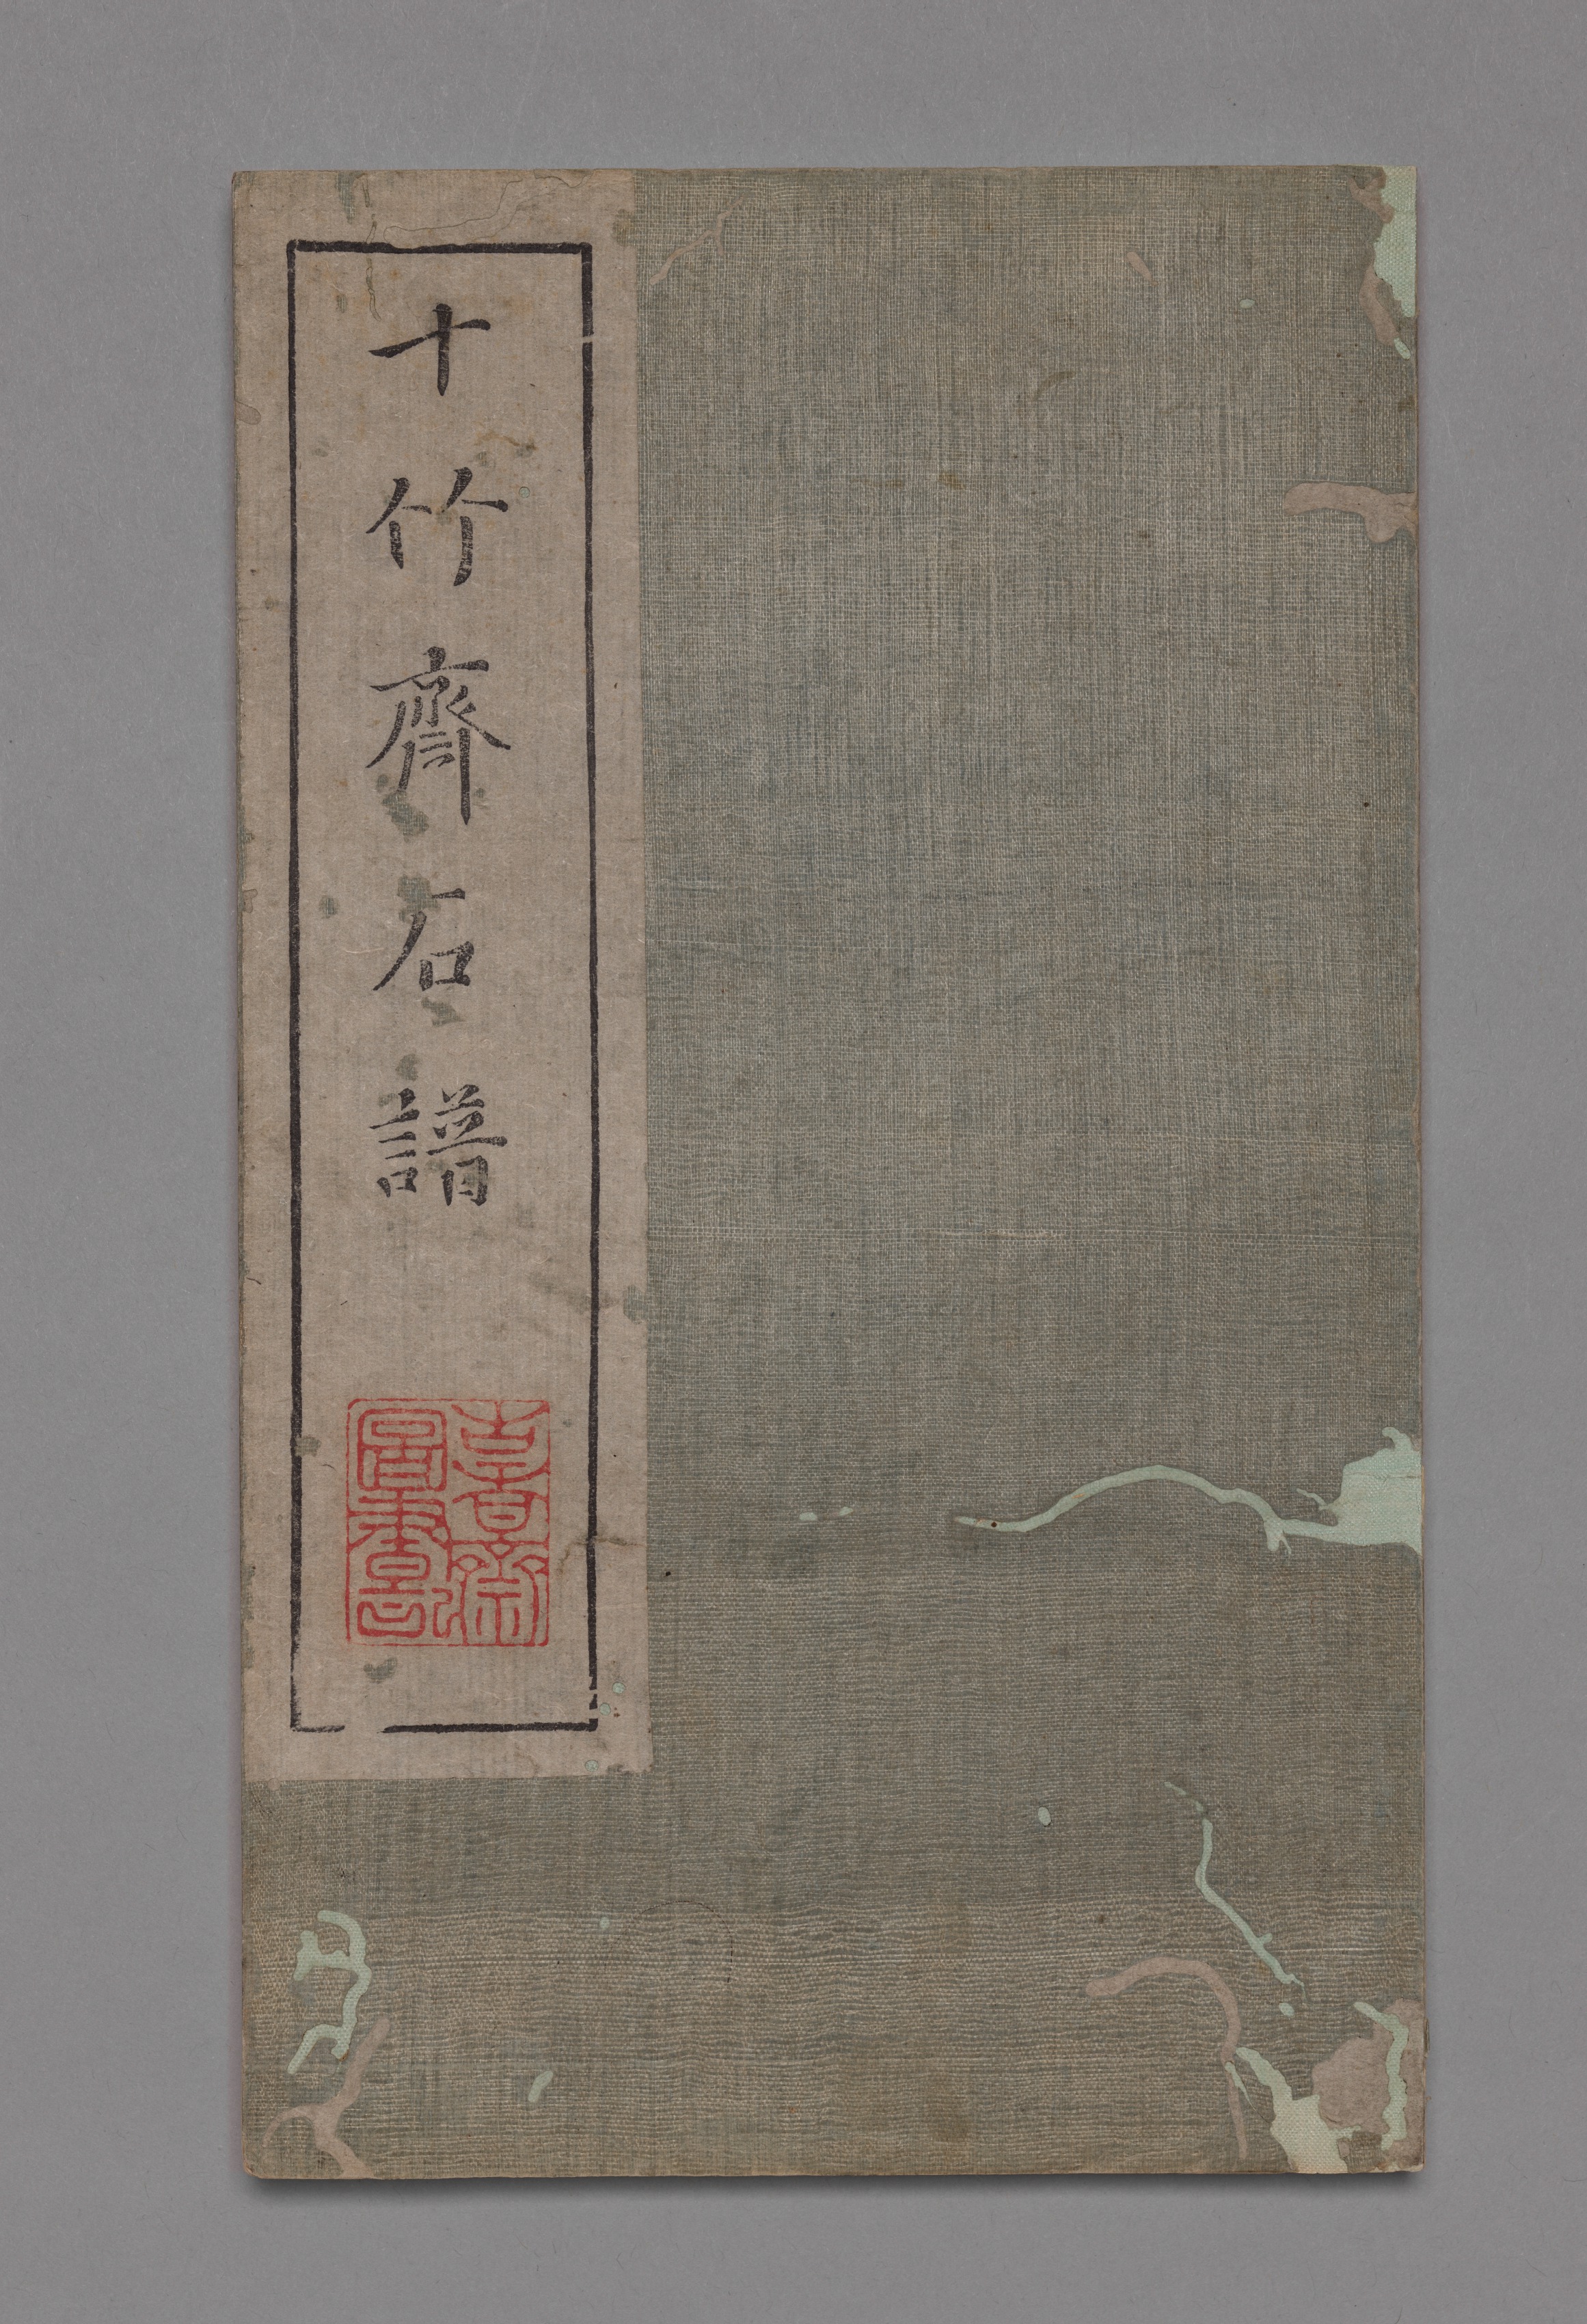 Ten Bamboo Studio Painting and Calligraphy Handbook (Shizhuzhai shuhua pu):  Rocks